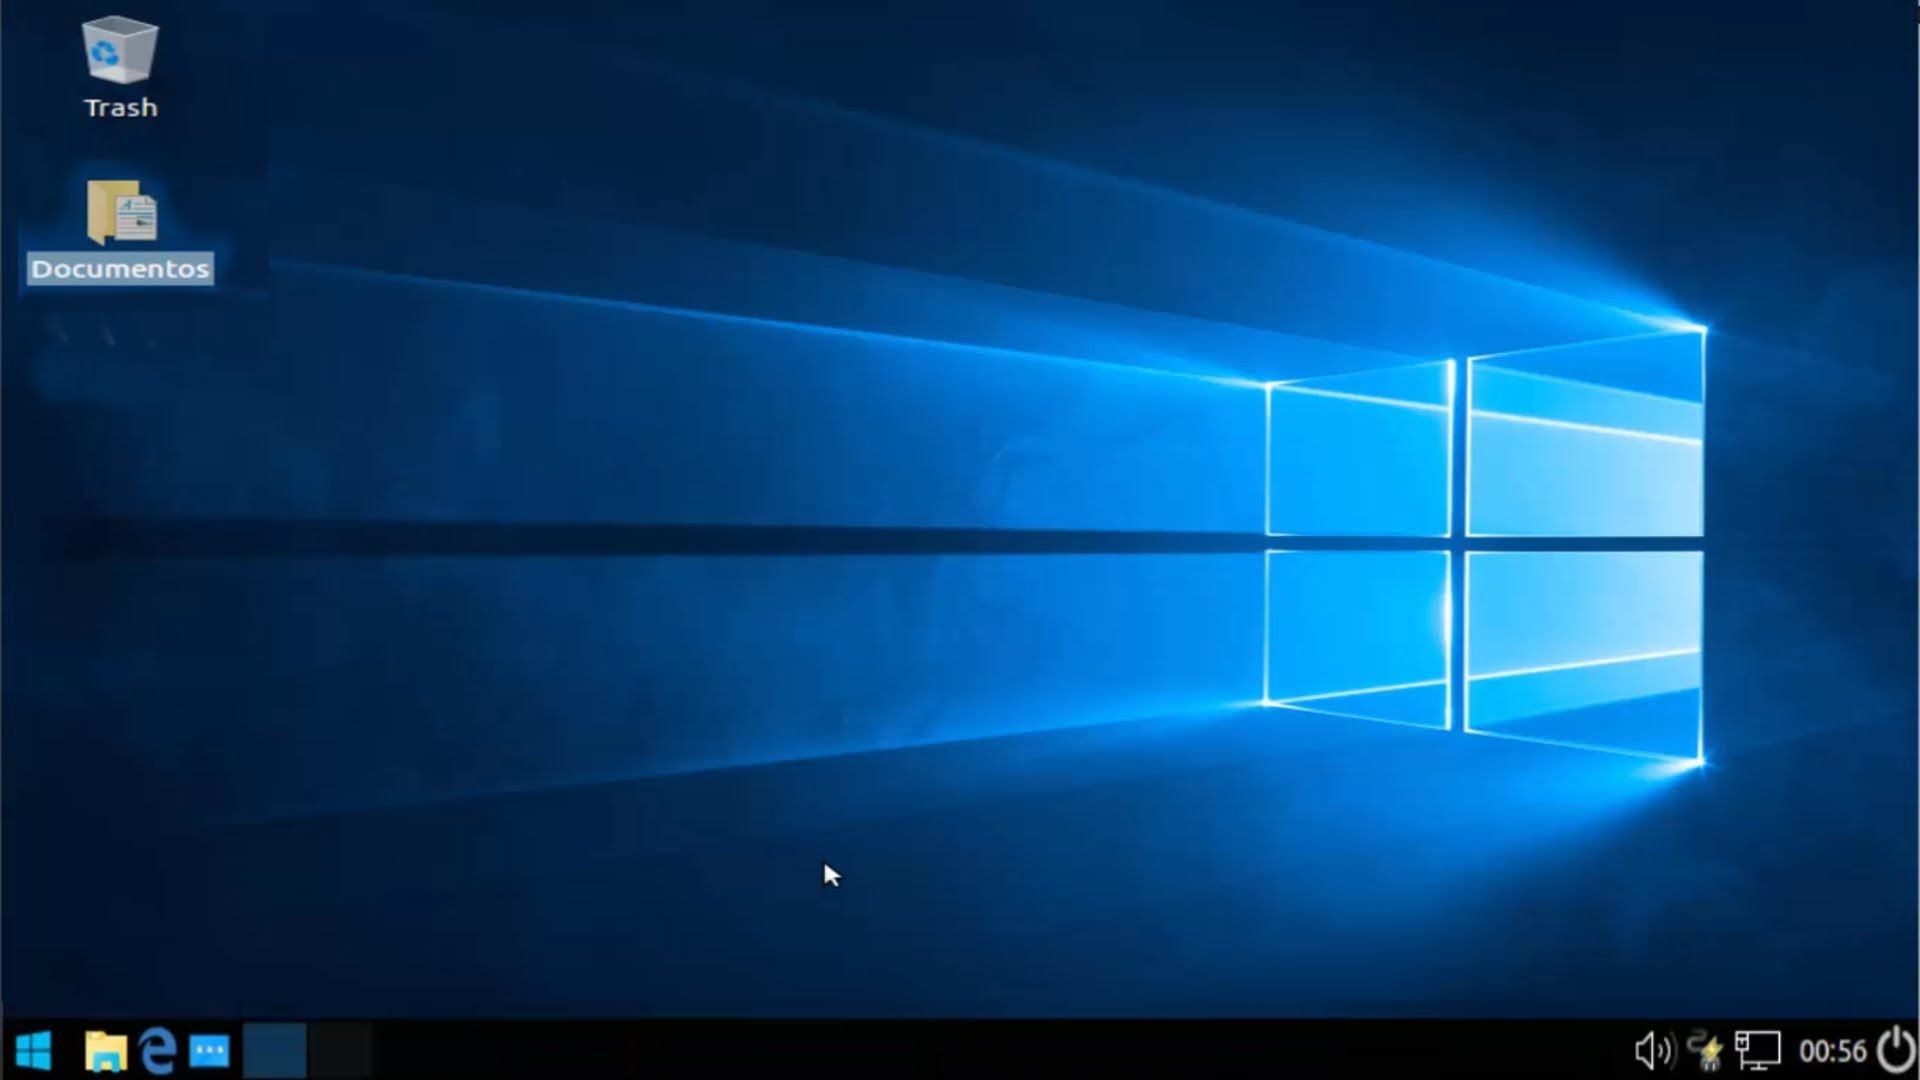 1920x1080 Windows 10 theme in Lubuntu 16 04 LTS LXDE Desktop